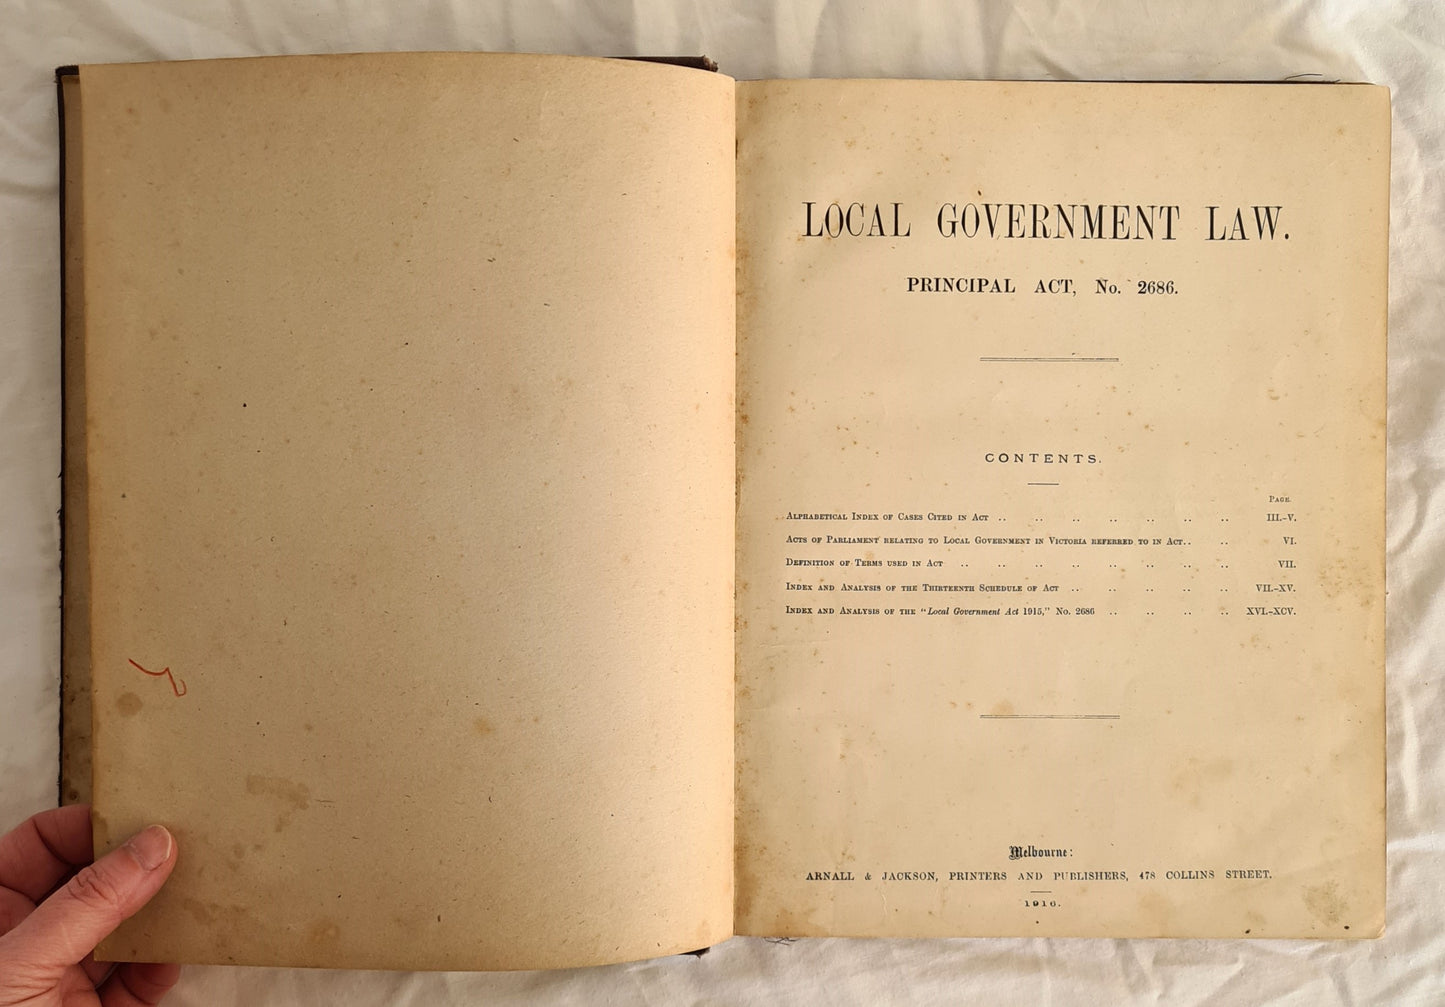 Local Government Law Principal Act, No. 2686.